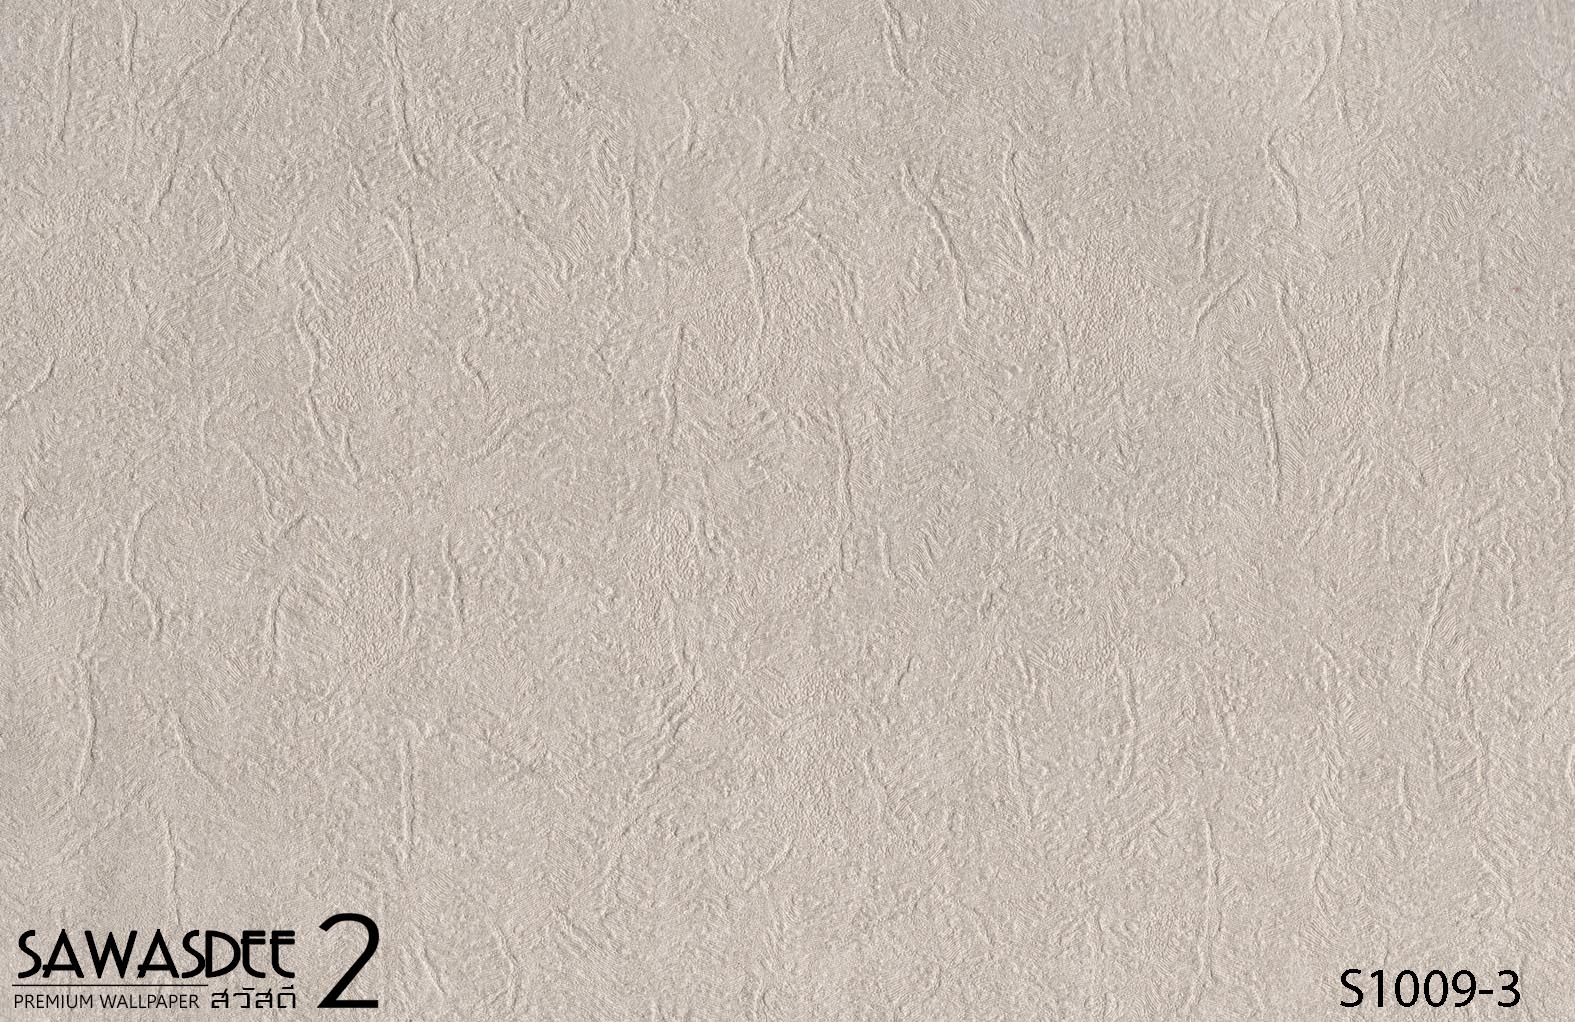 Wallpaper (SAWASDEE 2) S1009-3